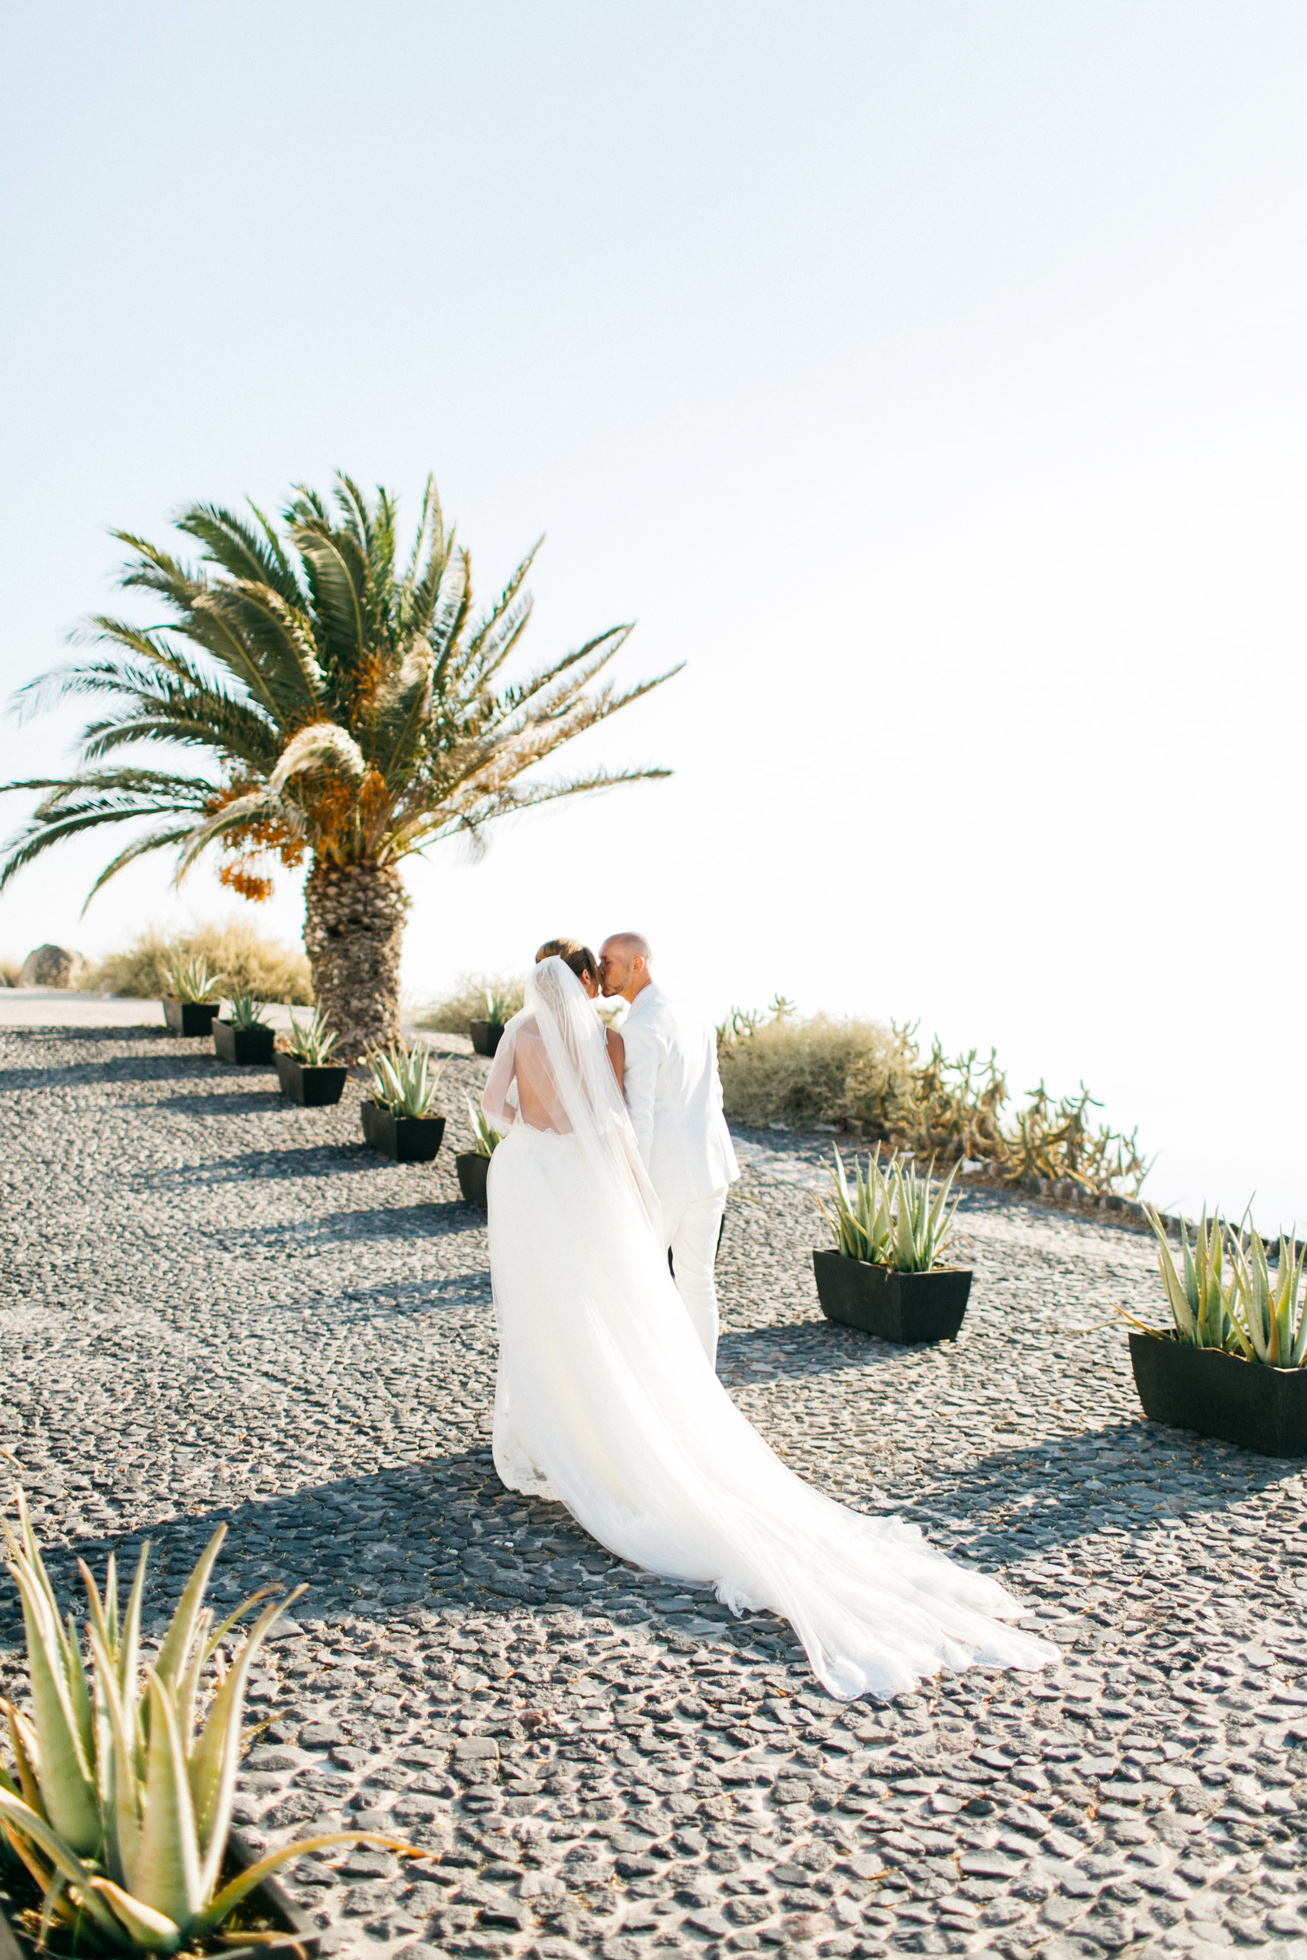 Bride and groom posing for their wedding day portraits on a cliffside near Le Ciel wedding estate in Santorini island, Greece.